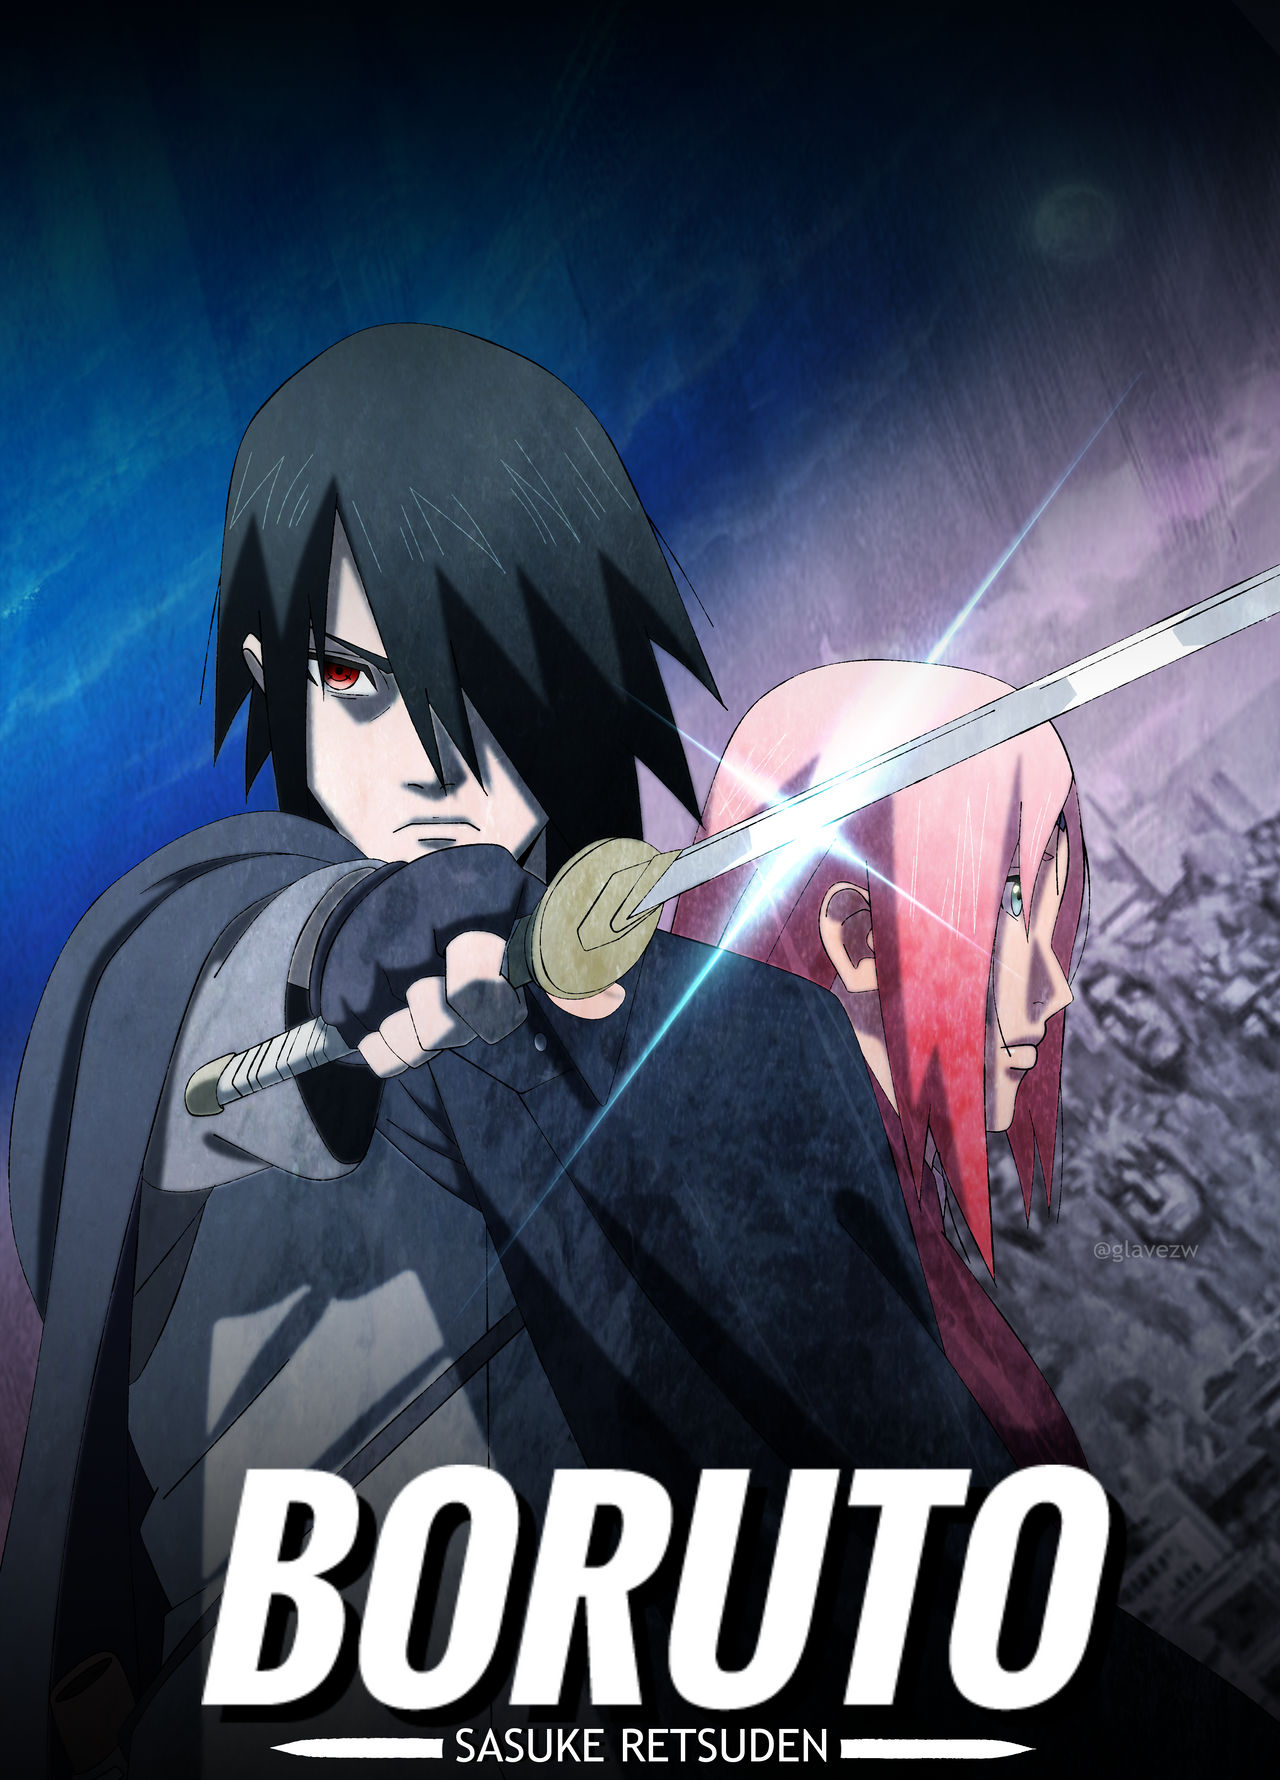 Boruto The Movie - Sasuke Uchiha by roxannepitts on DeviantArt